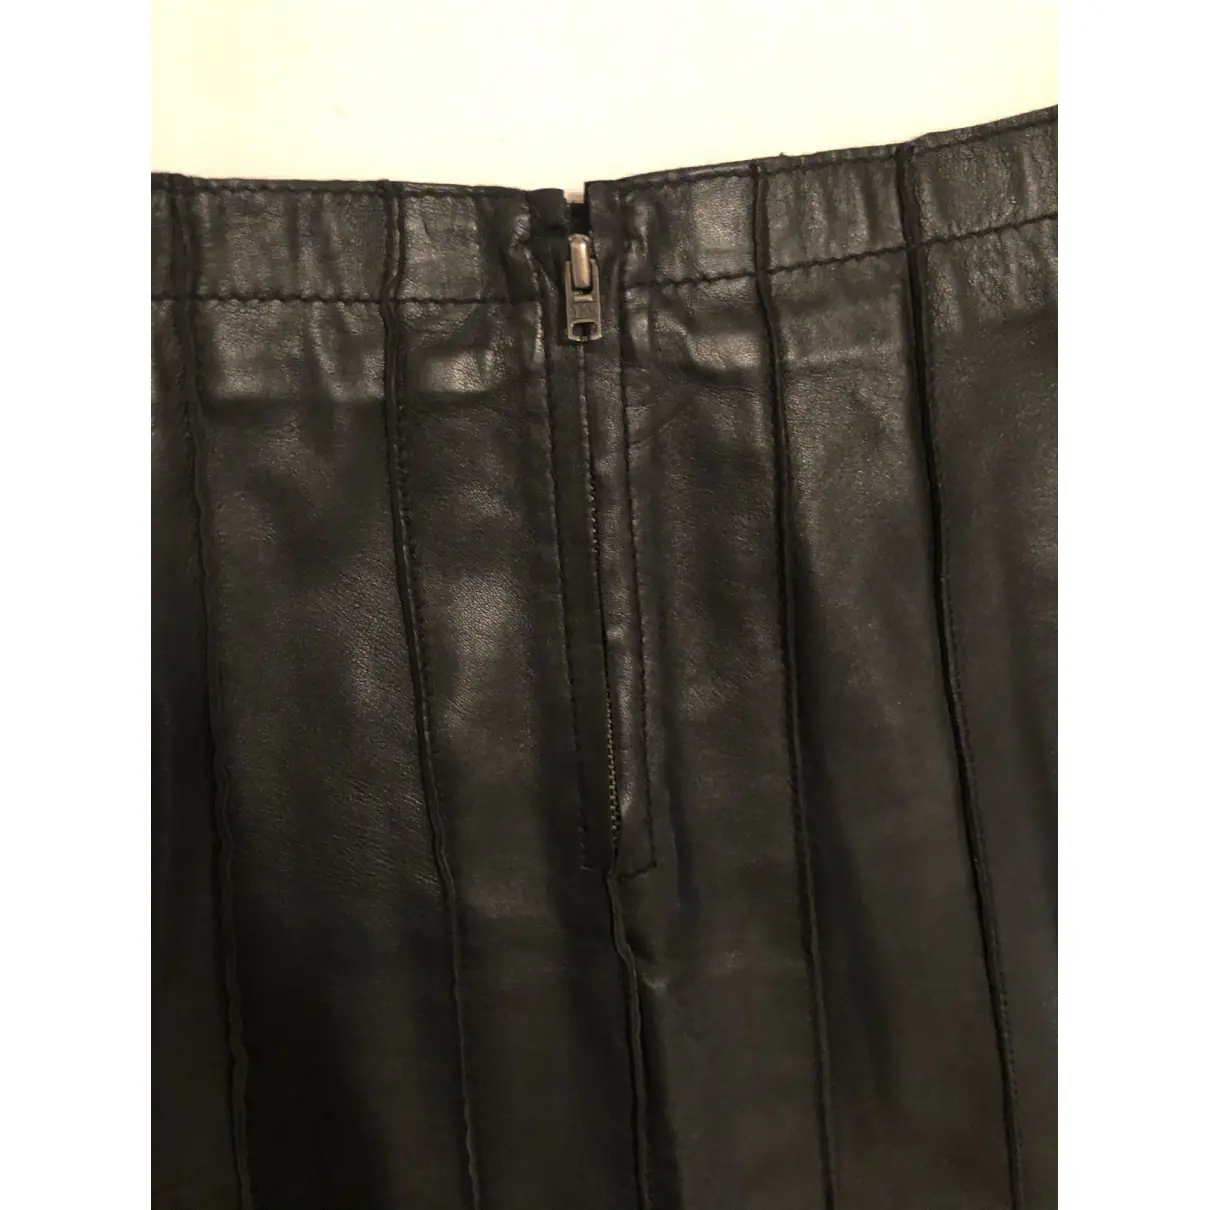 Leather mini skirt Max & Co